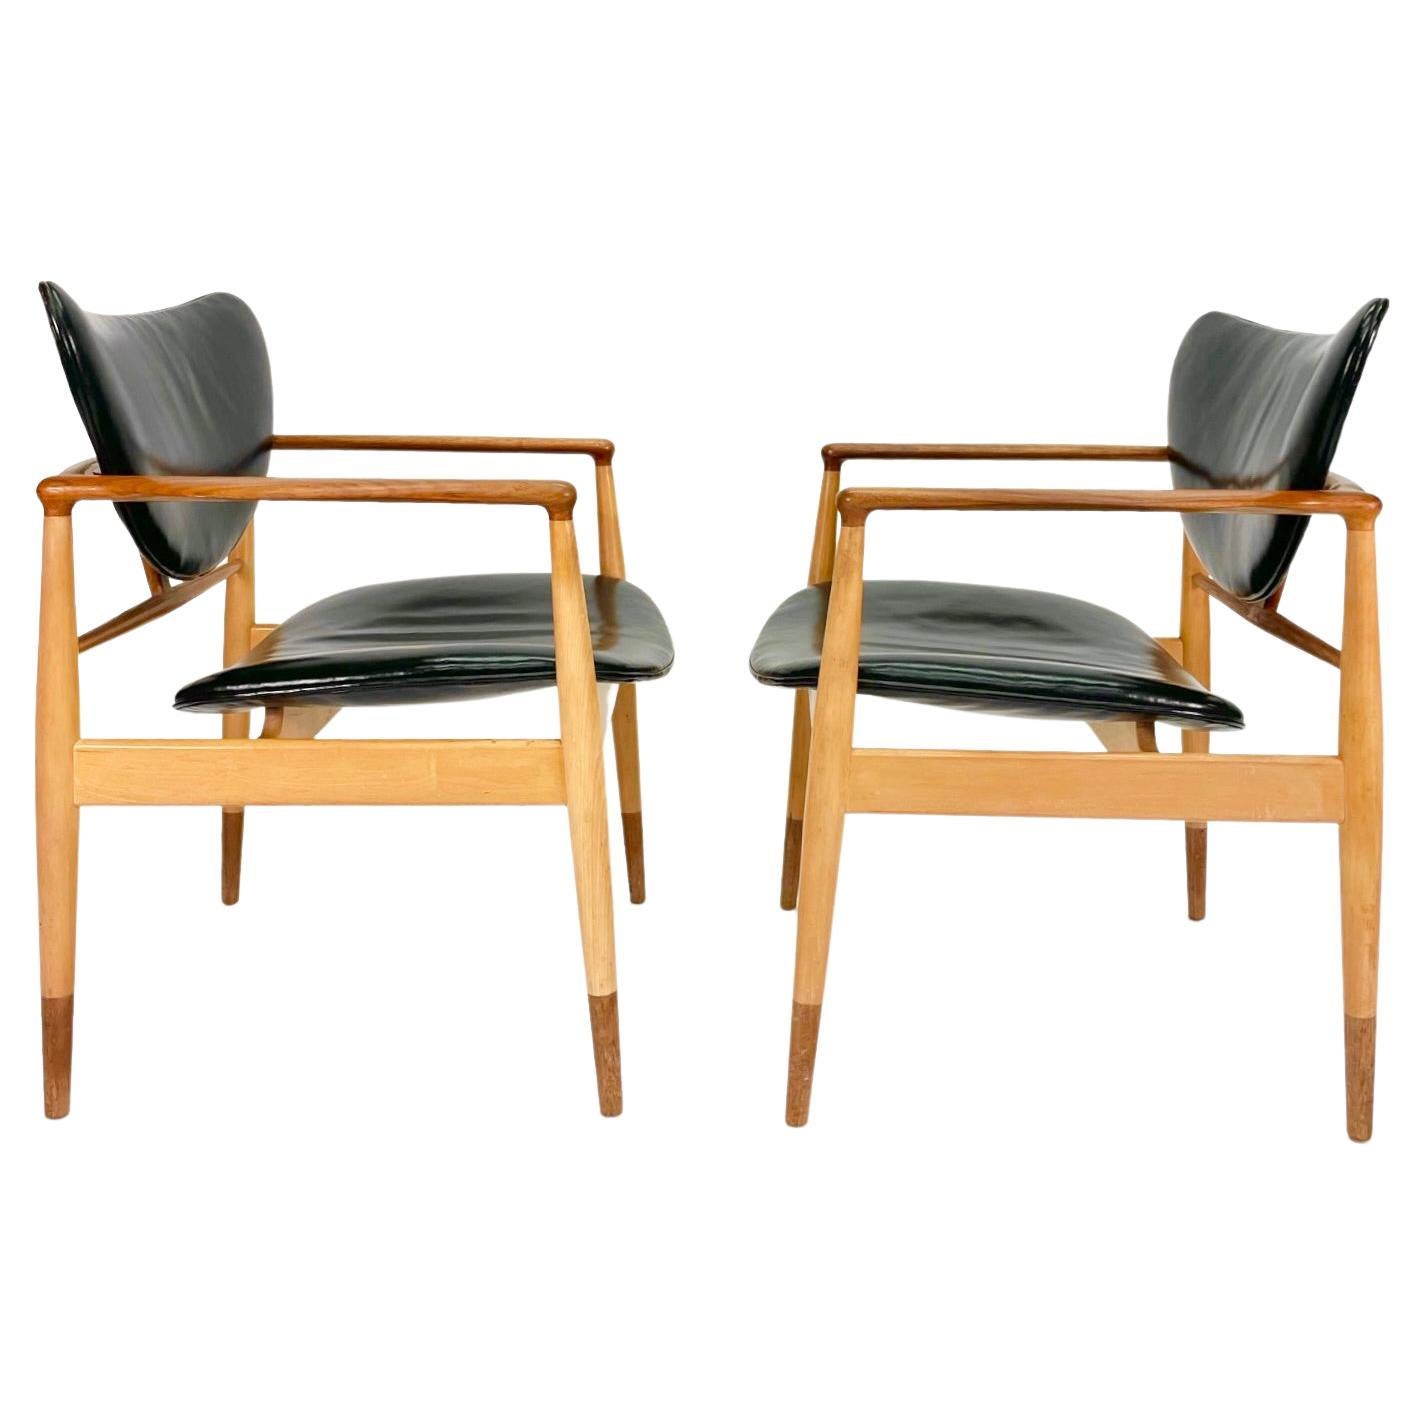 Finn Juhl Model 48 Chair by Baker, in Teak and Maple (2 available) For Sale